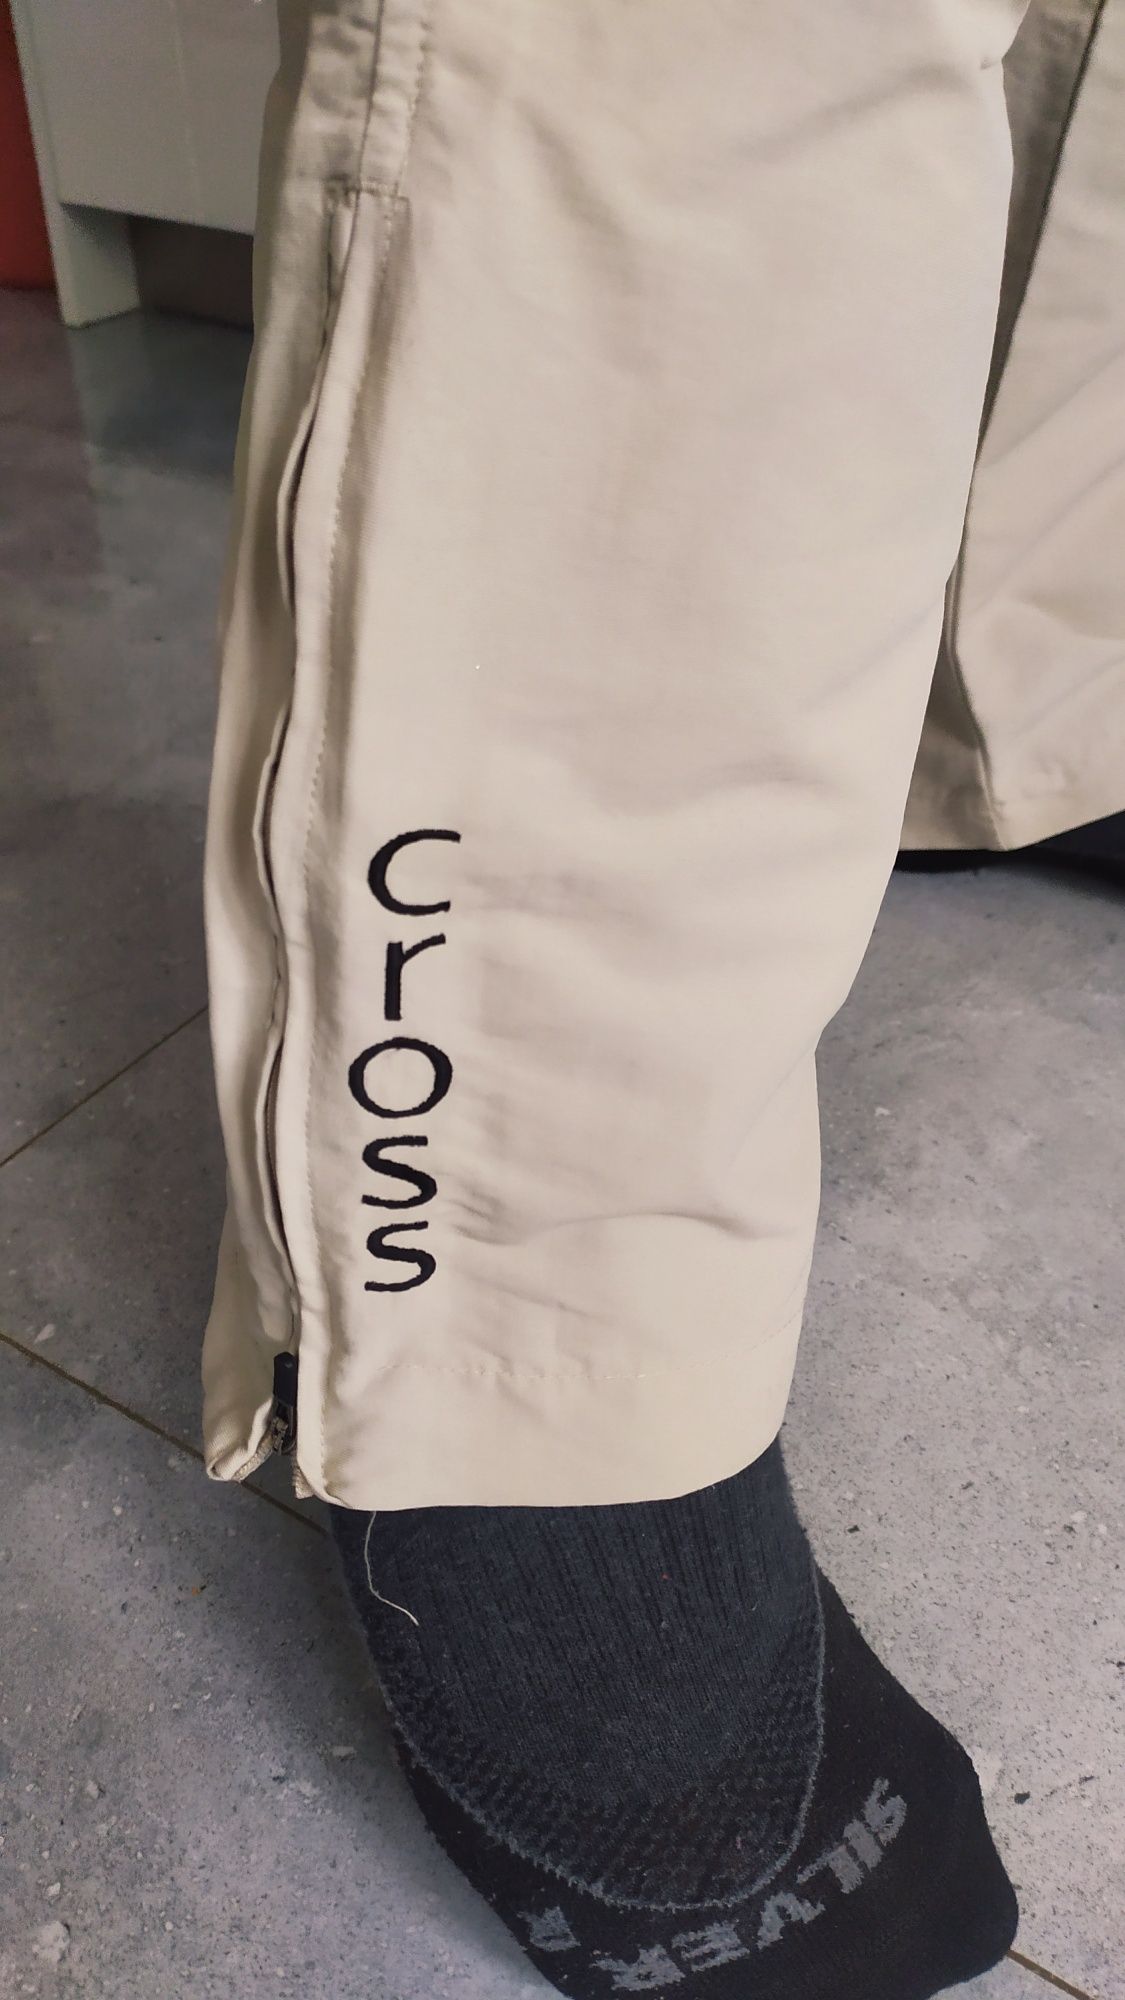 SG spodnie męskie XL, Cross,